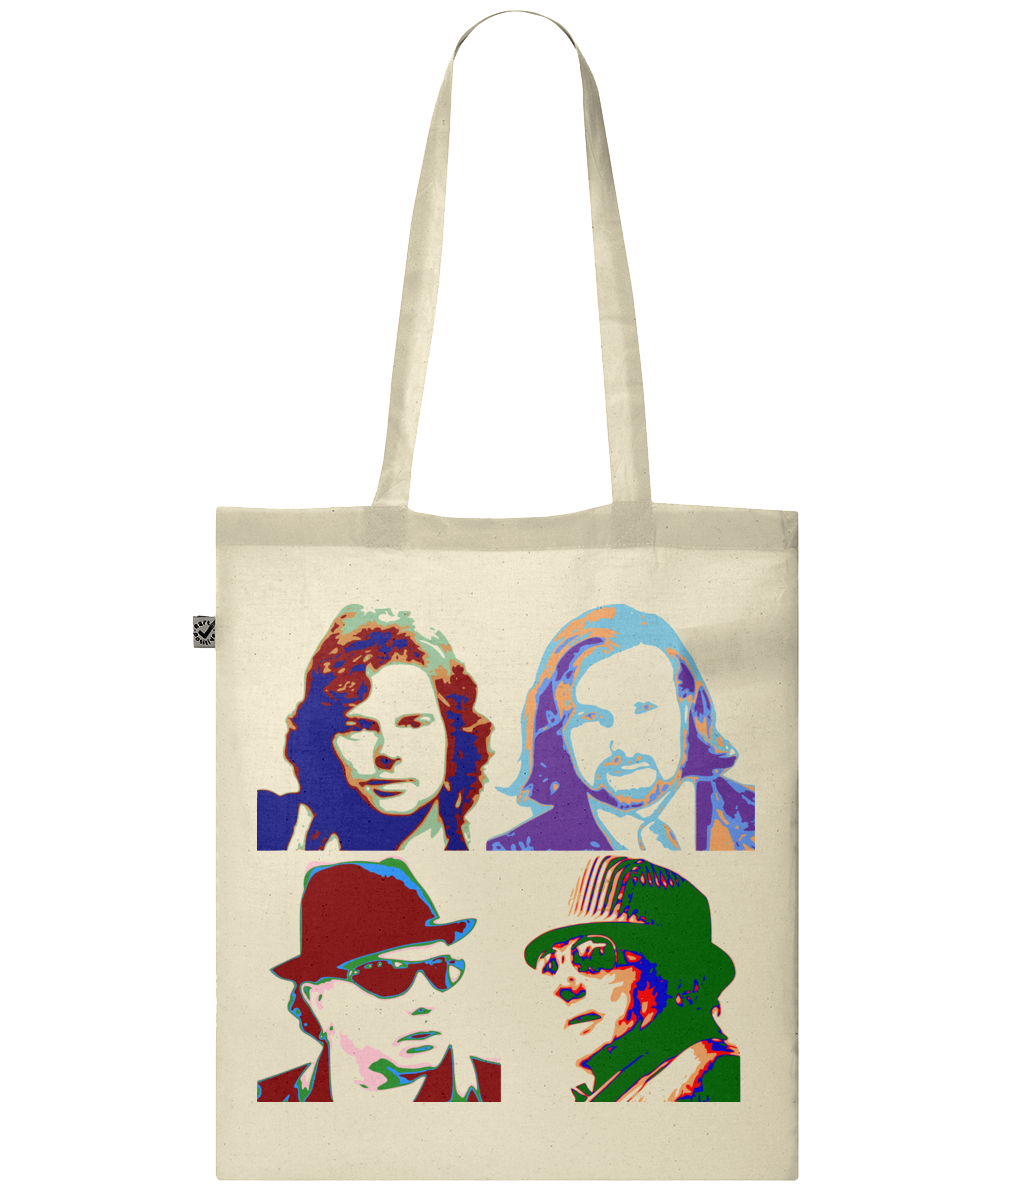 Van Morrison tote shopping bag